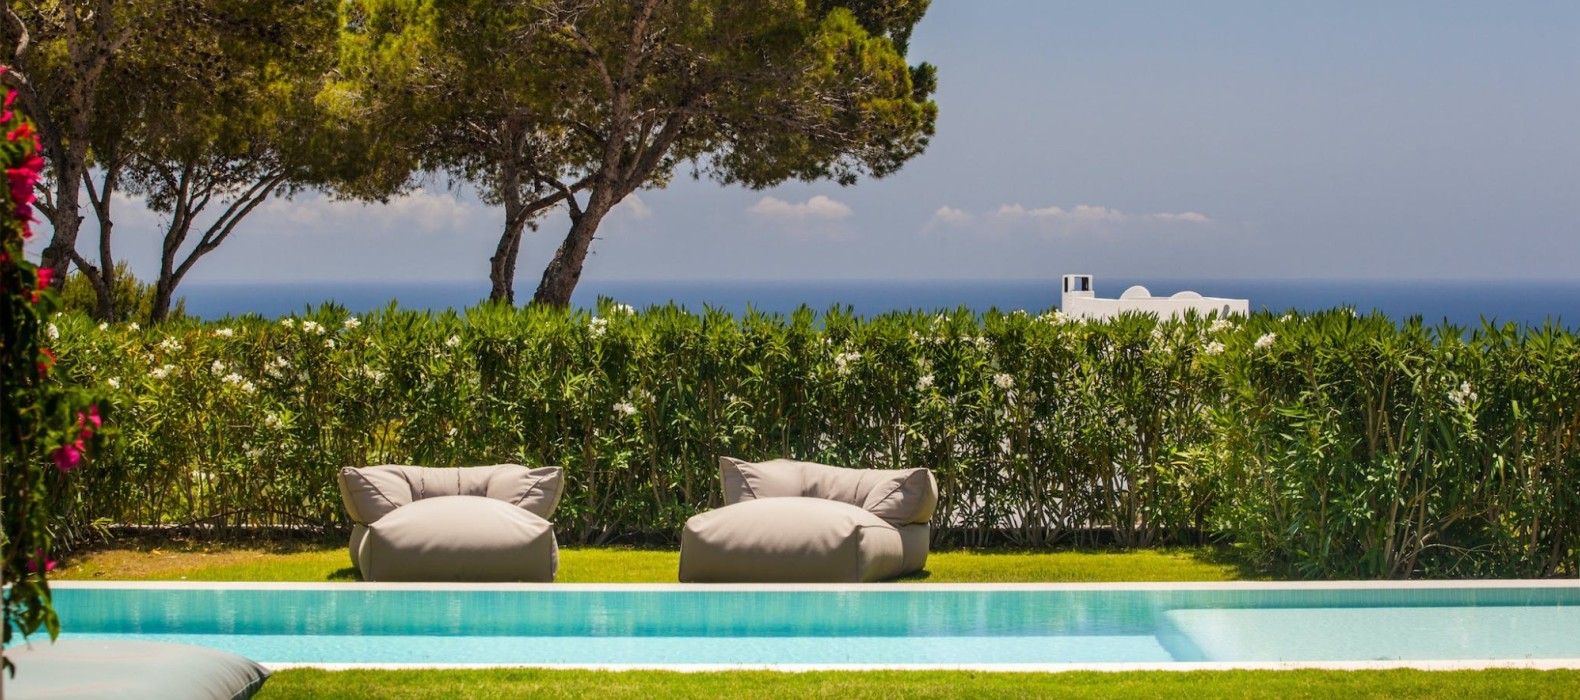 Exterior pool area of Villa Colada in Ibiza